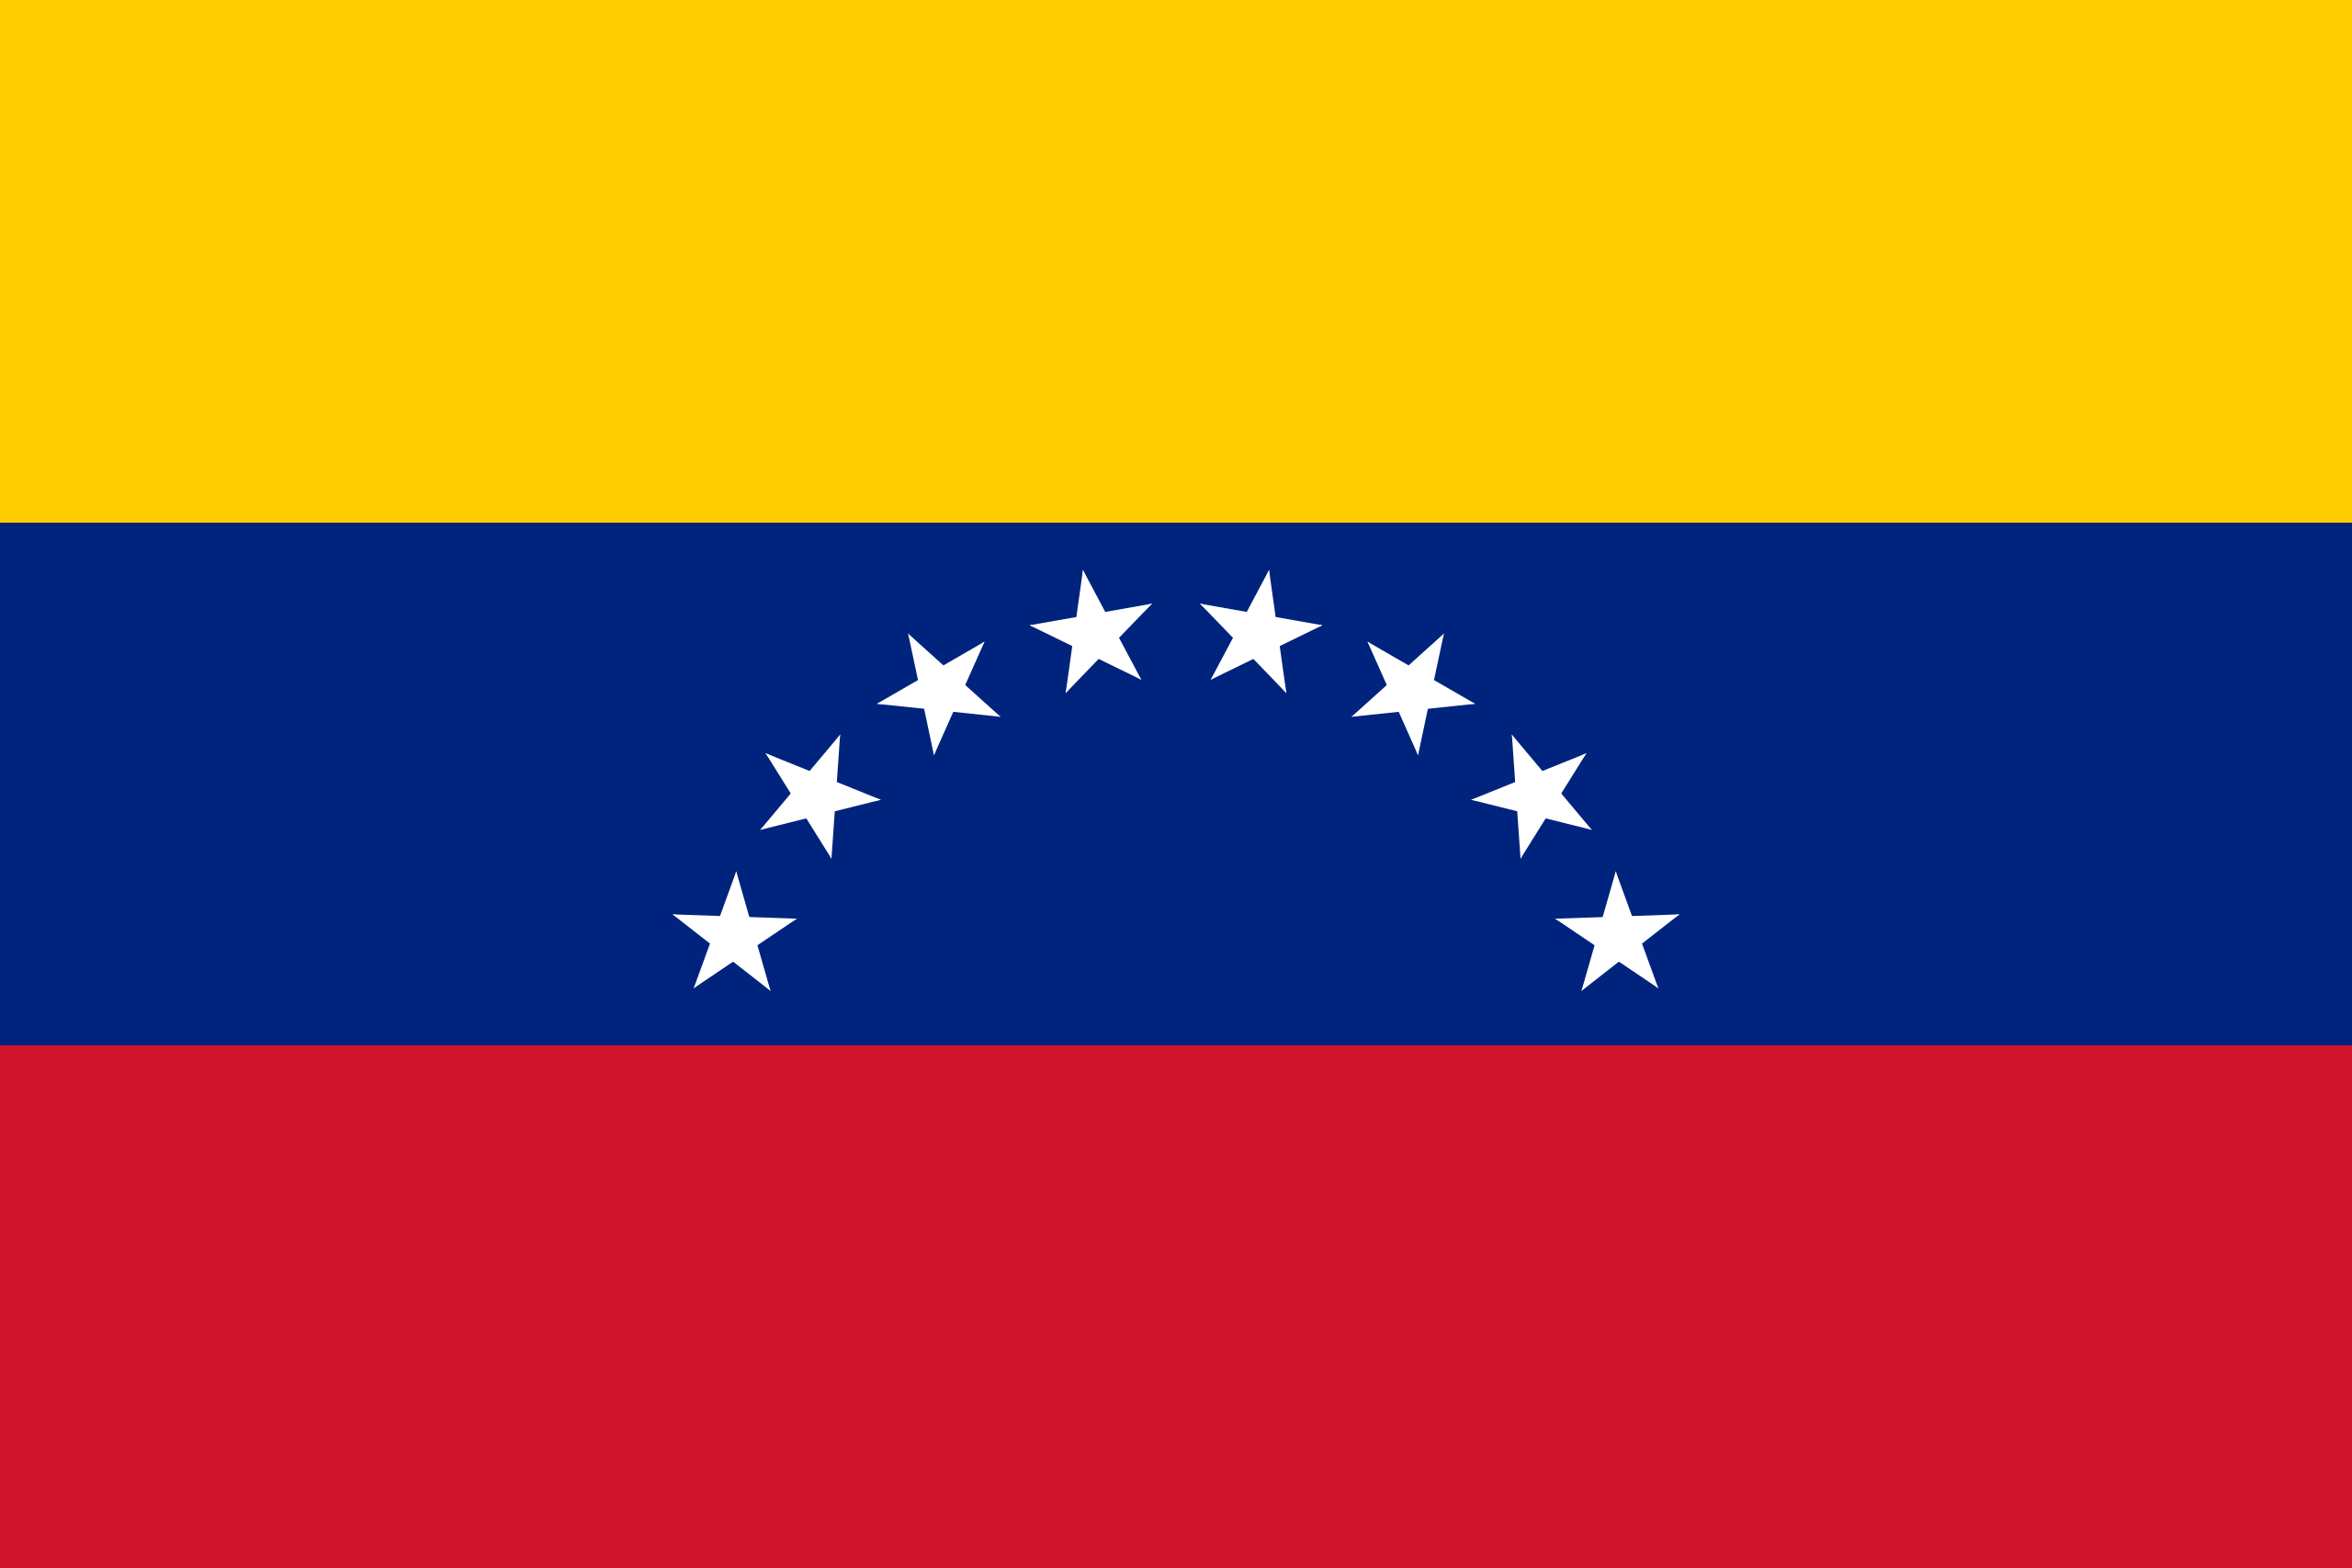 Thumbnail for File:Venezuelan flag.png